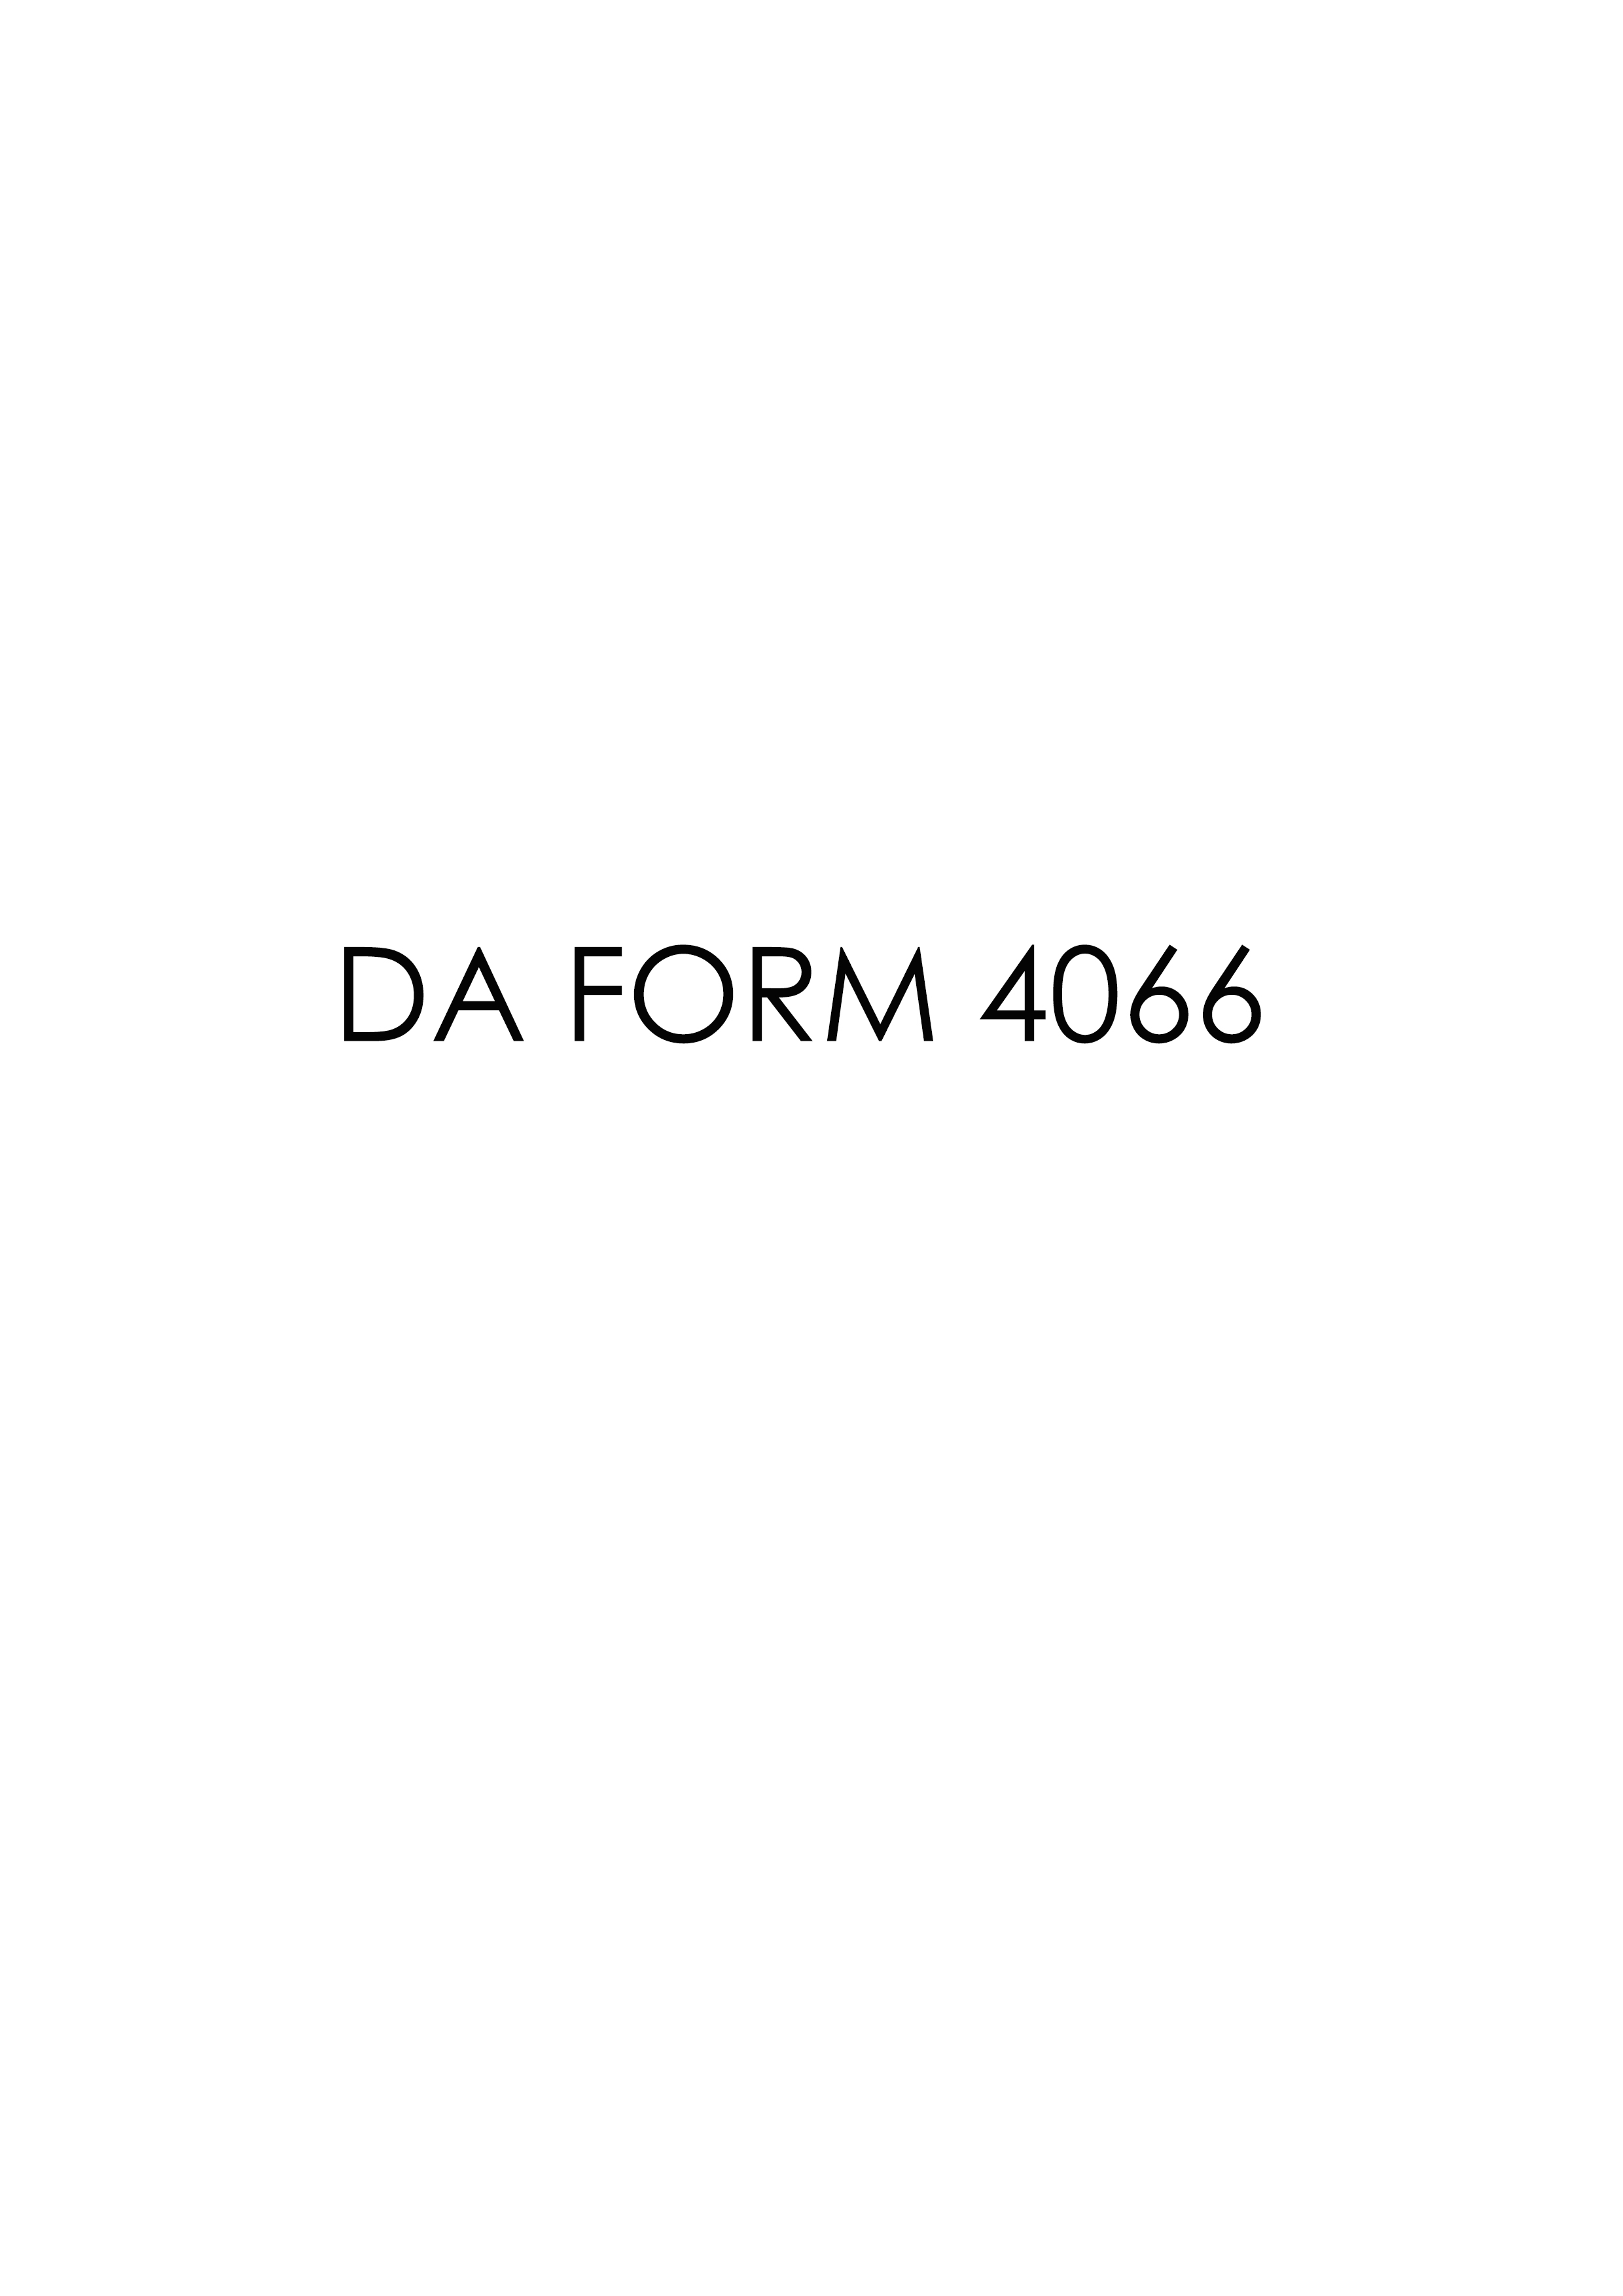 da Form 4066 fillable